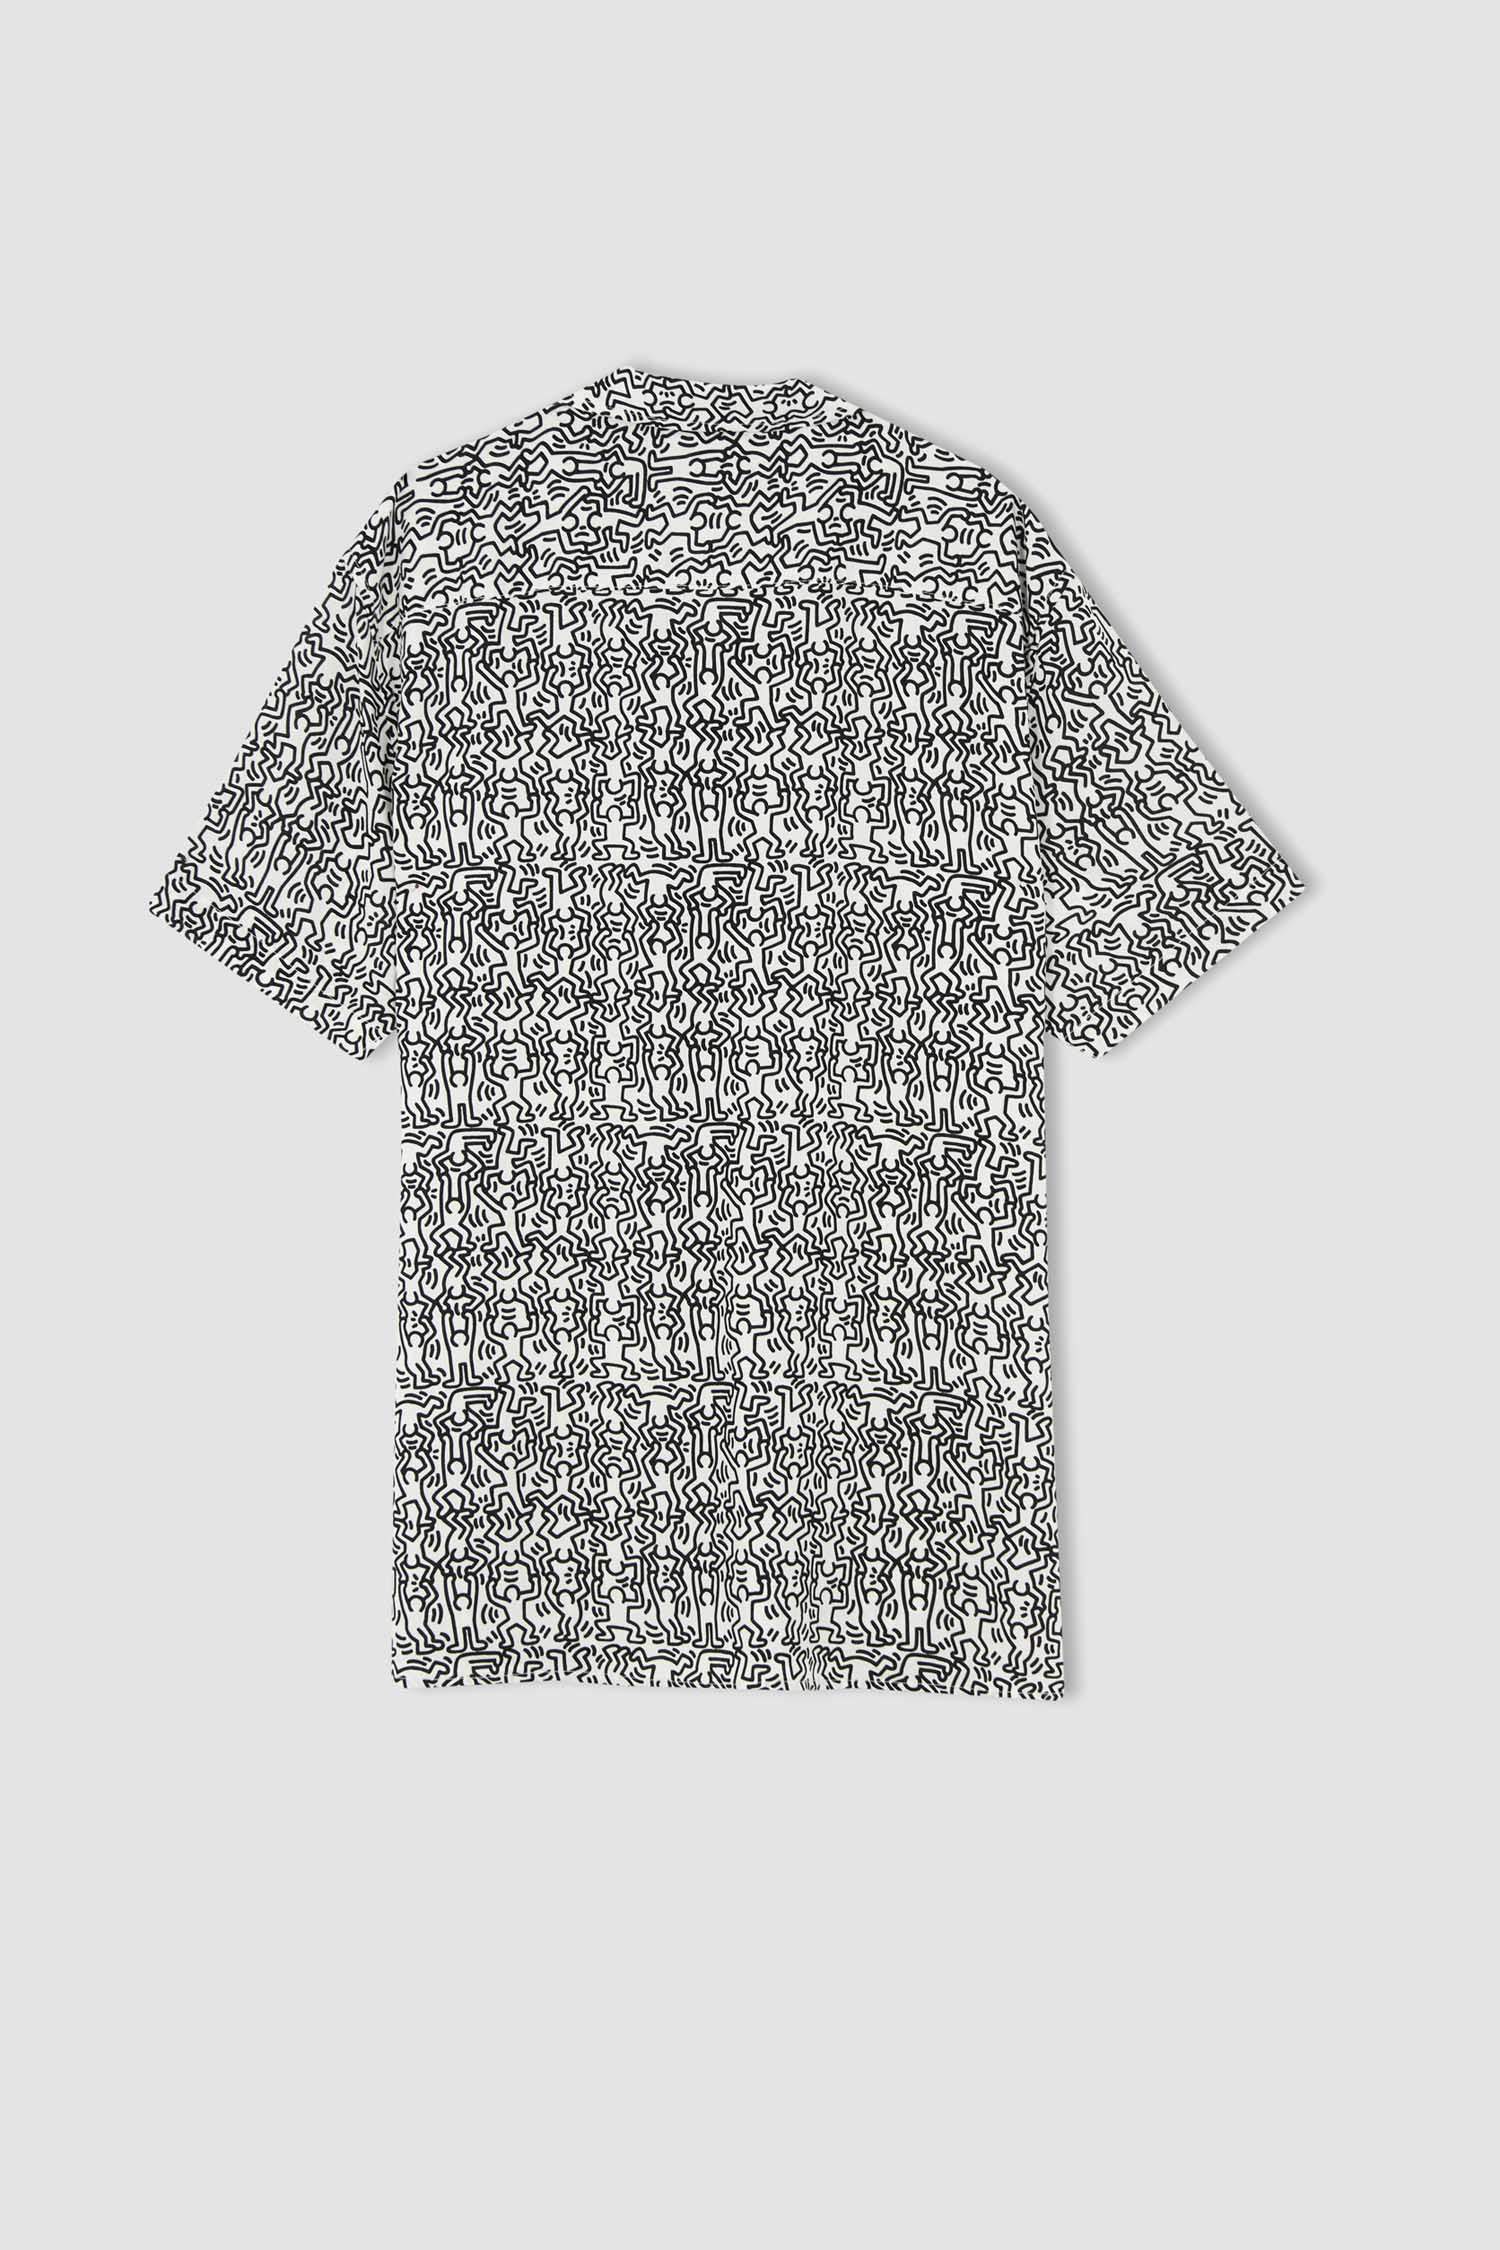 Defacto Coool Keith Haring Regular Fit Kısa Kollu Viskon Hawaii Gömlek. 9